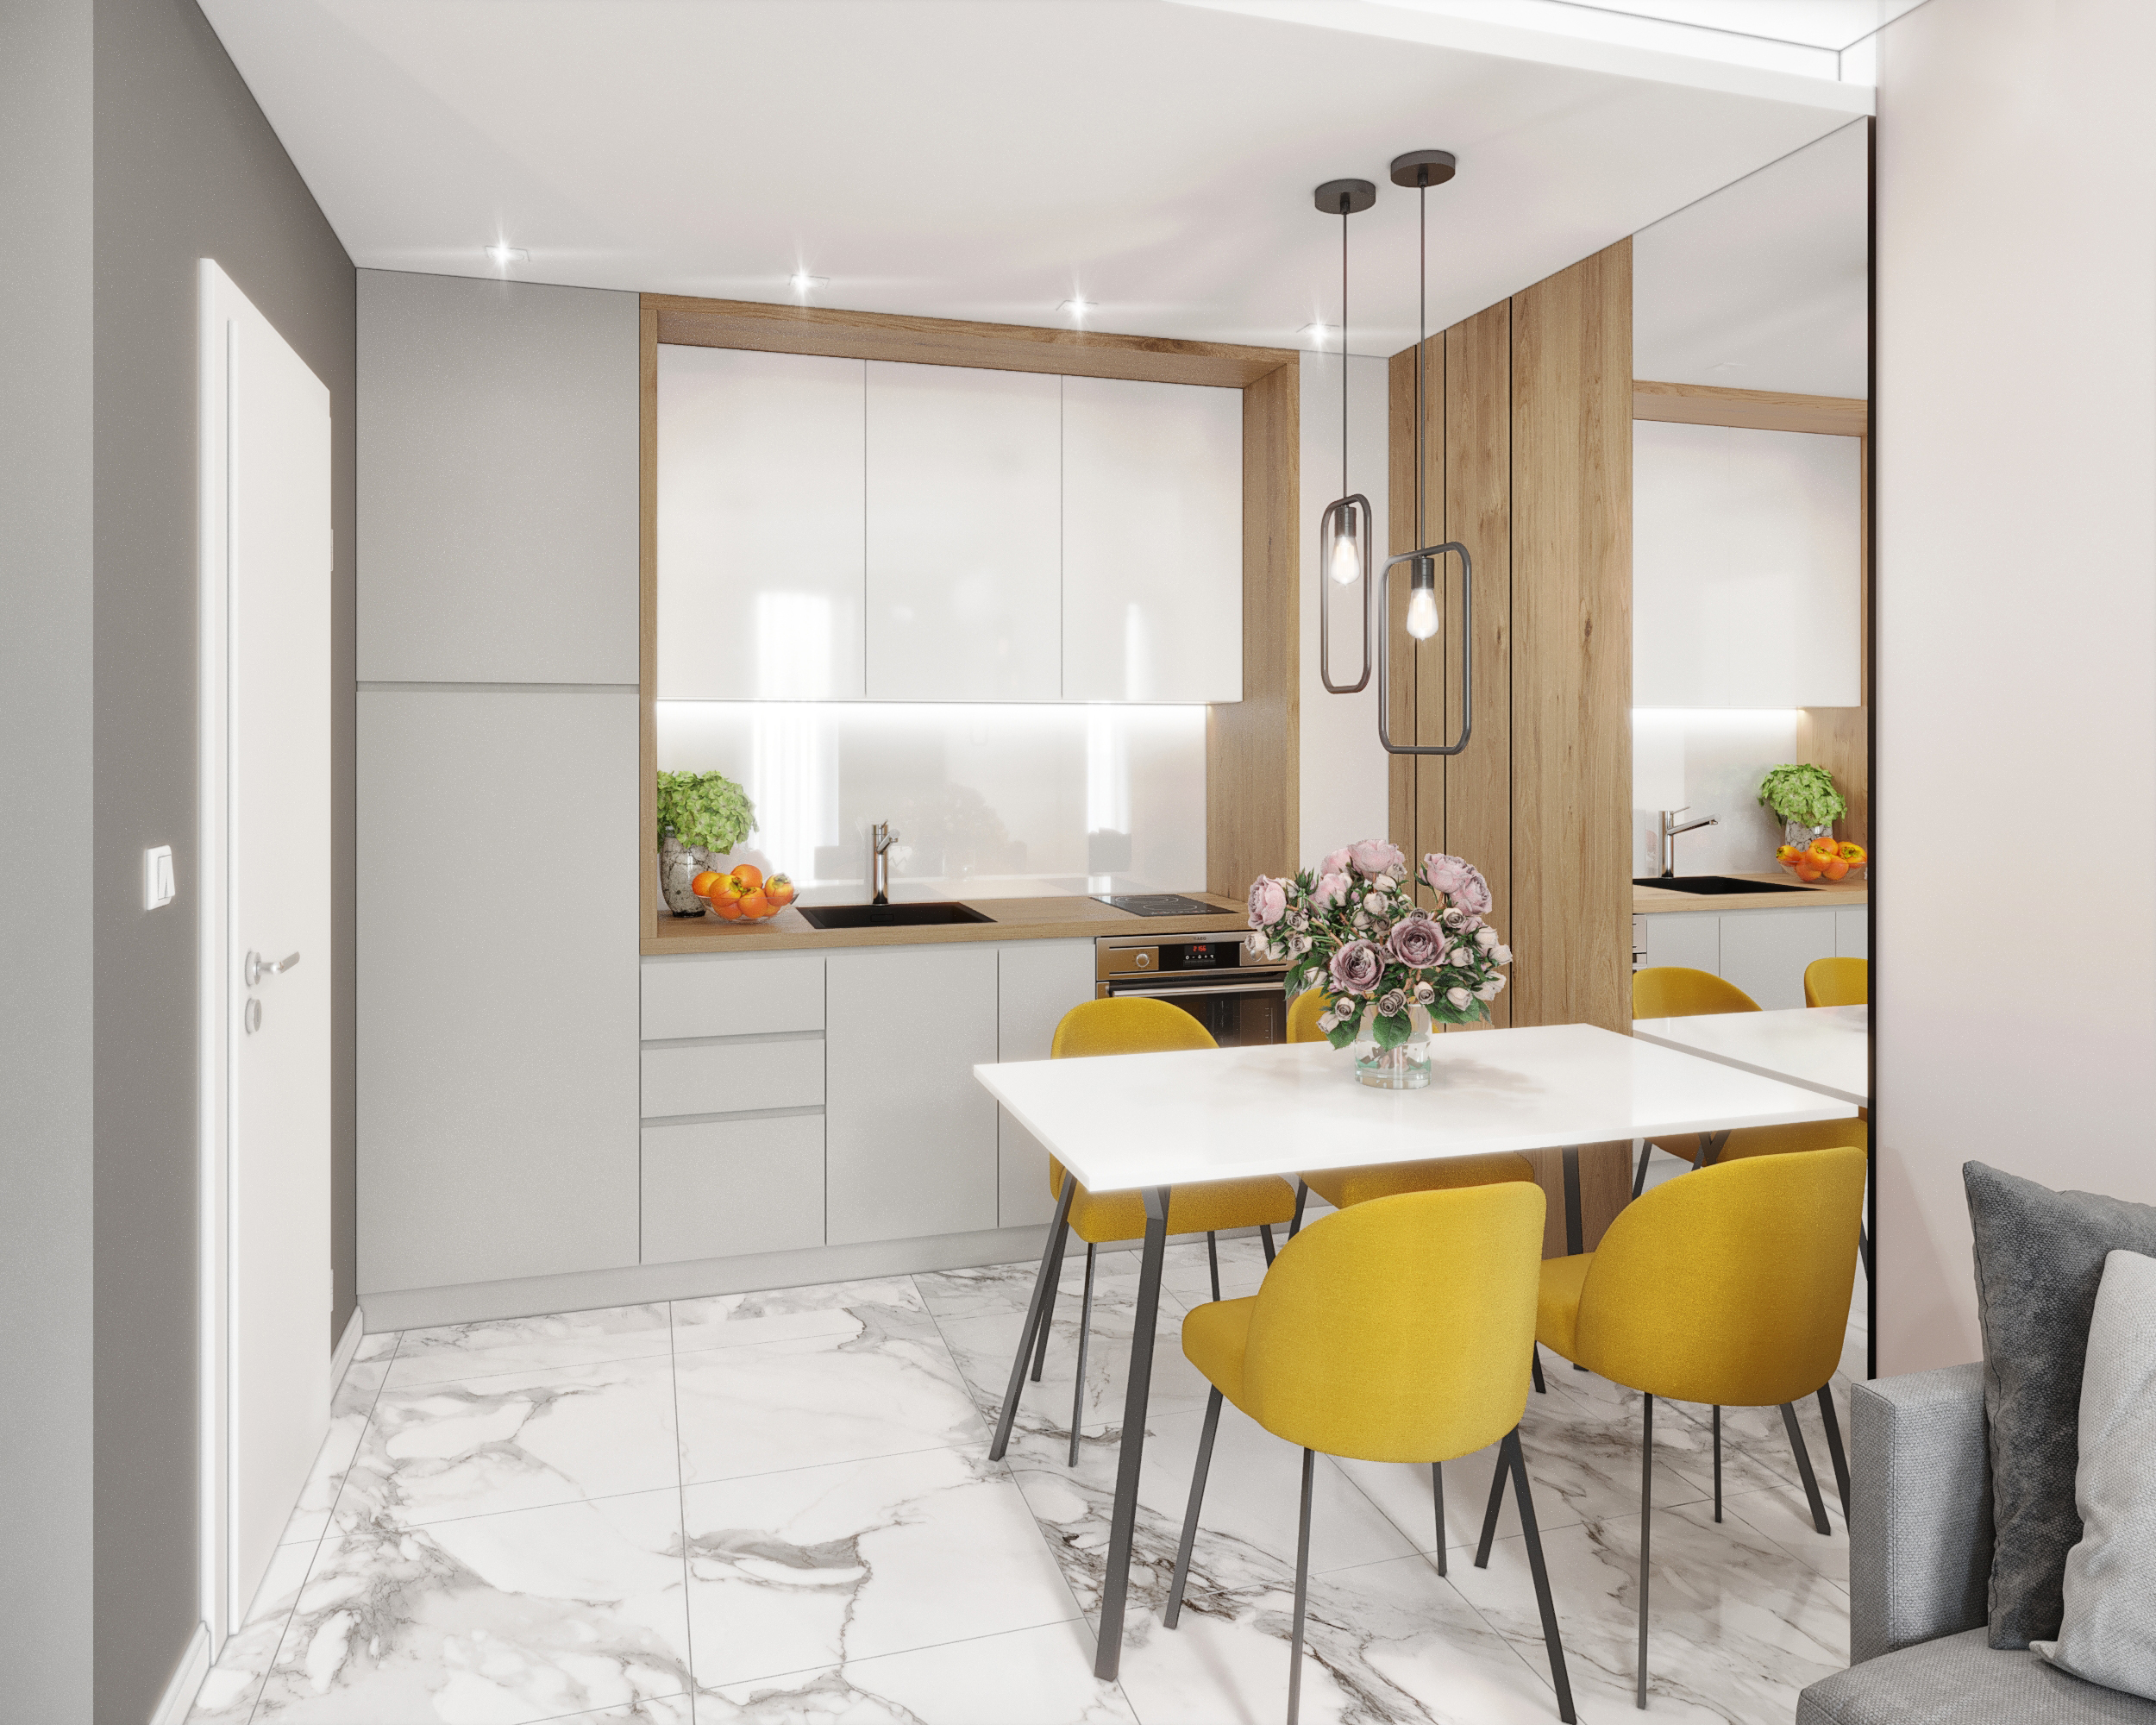 For Sale: New Complex! One-bedroom apartment in Emilia Romana Park